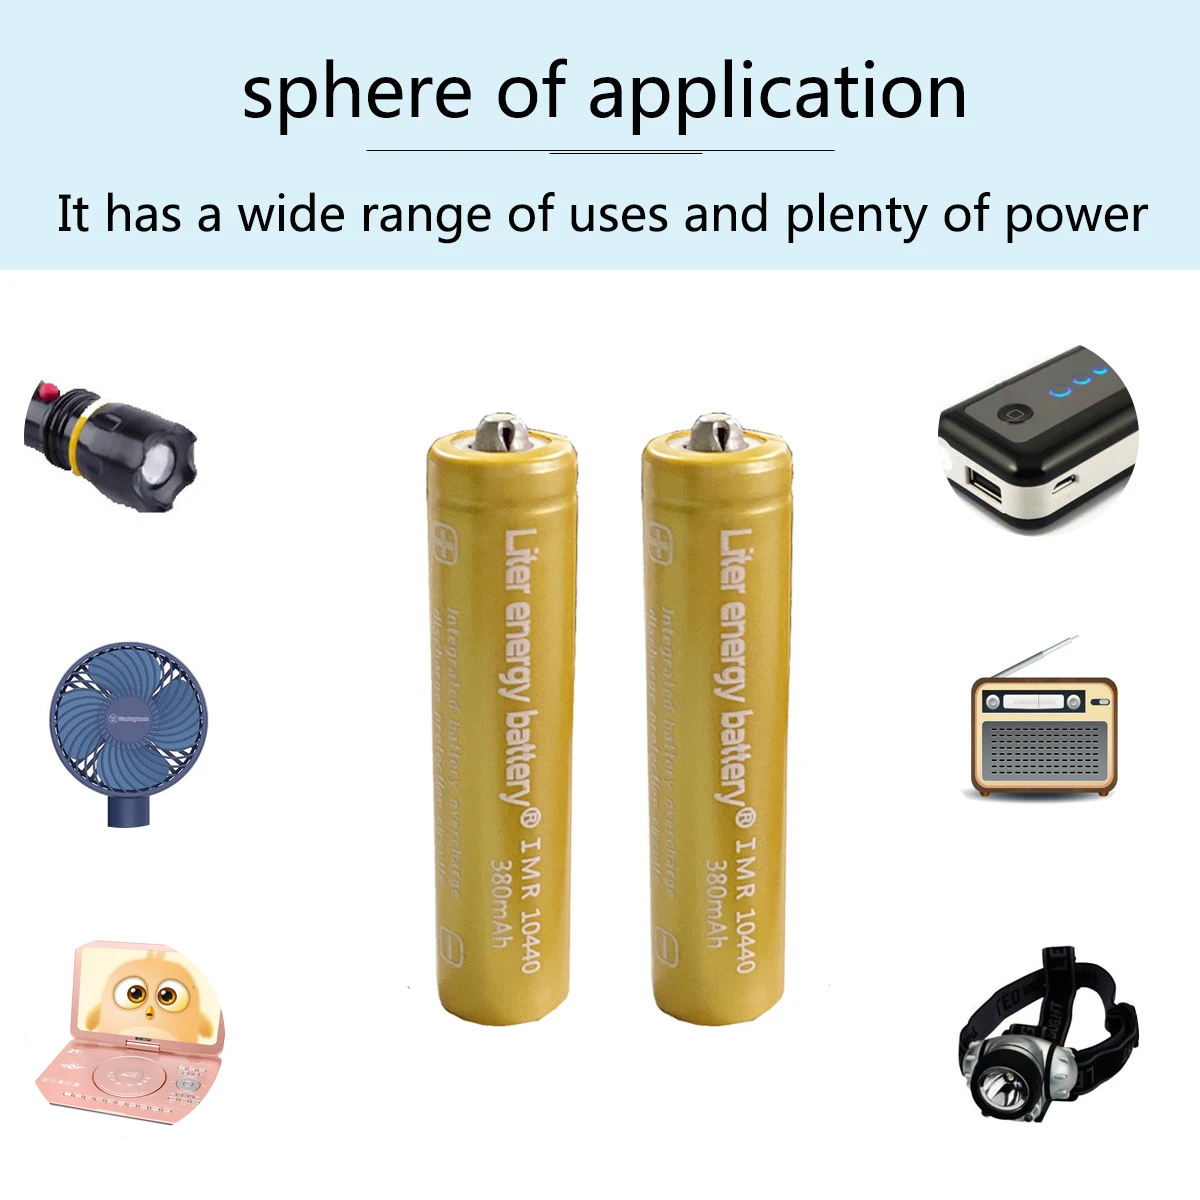 

20pcs Liter energy battery 3.7V 380mAh High Capacity 10440 Li-ion Rechargeable Battery AAA Battery for LED Flashlights Headlamps